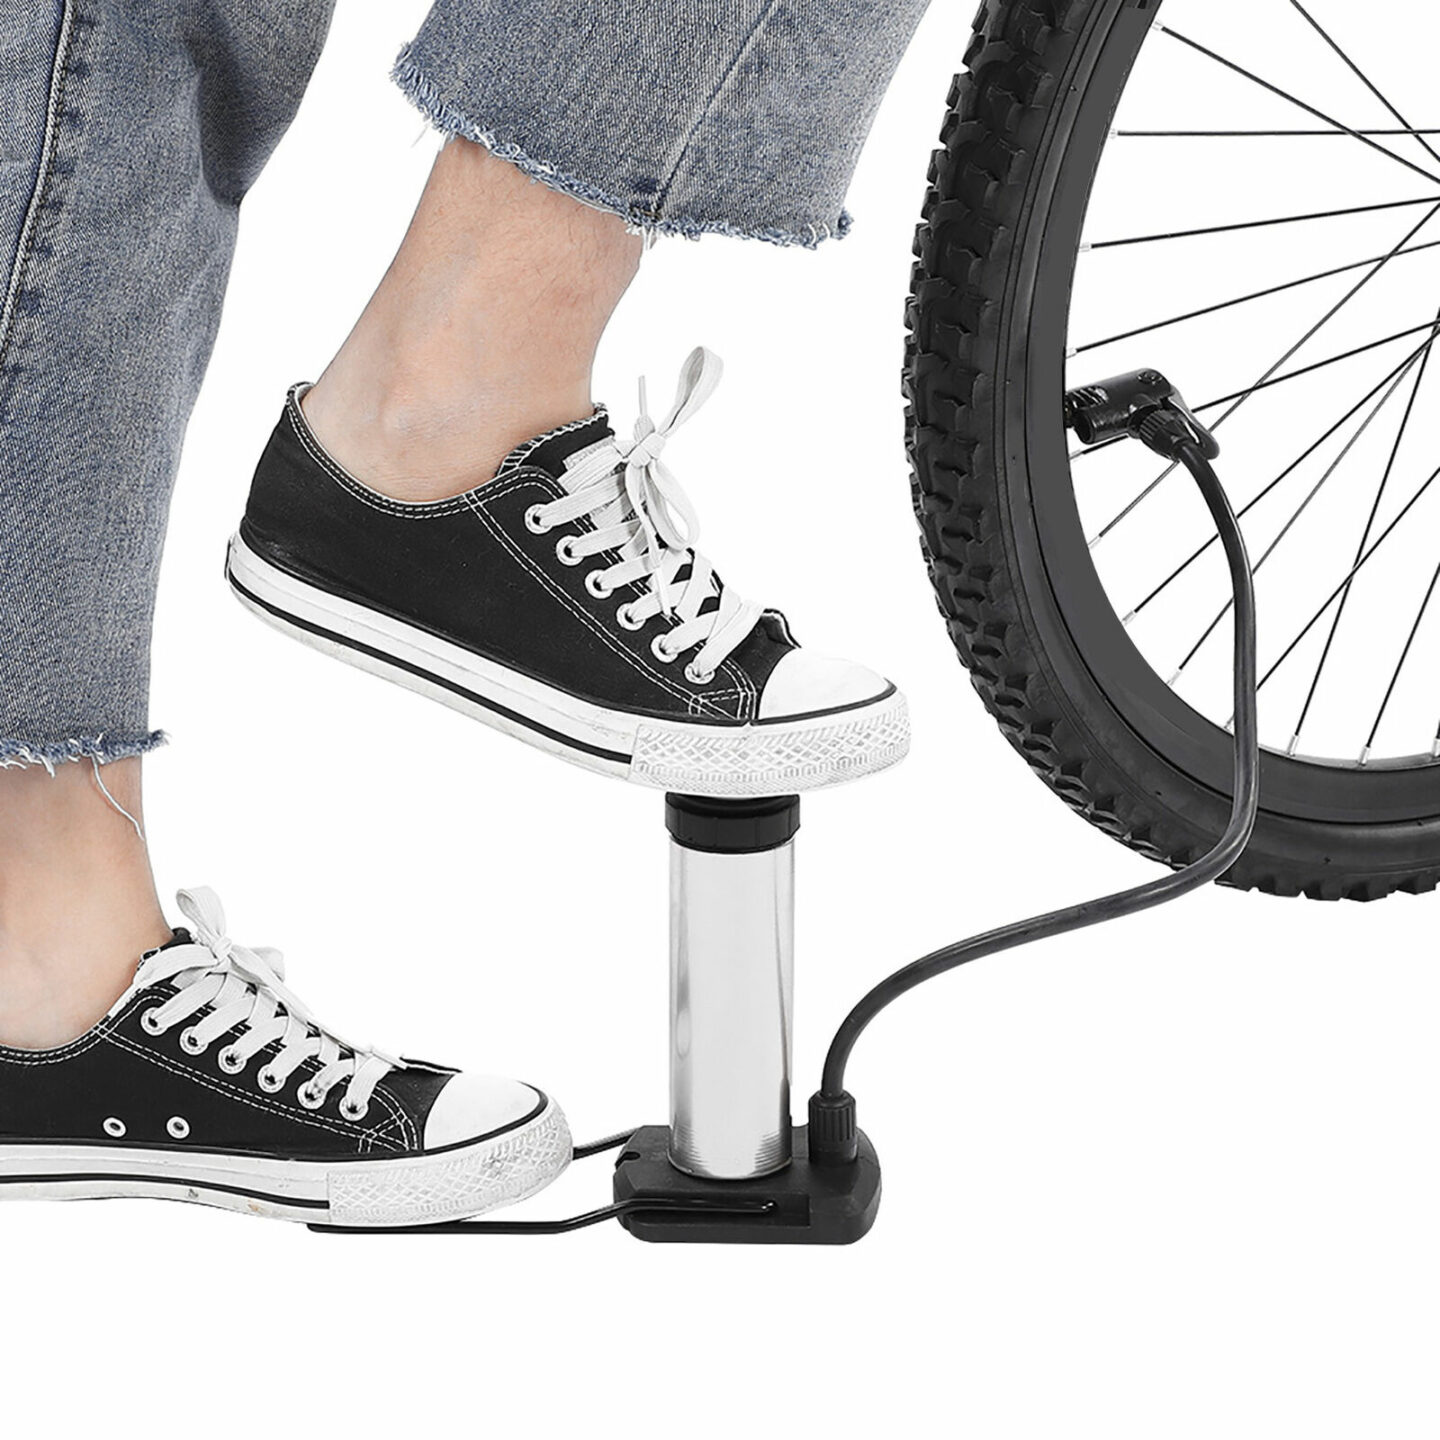 Portable Mini Foot Air Pump for Bicycle, Bike, and Car: Buy Portable Mini Foot Air Pump Best Price in Sri Lanka | ido.lk